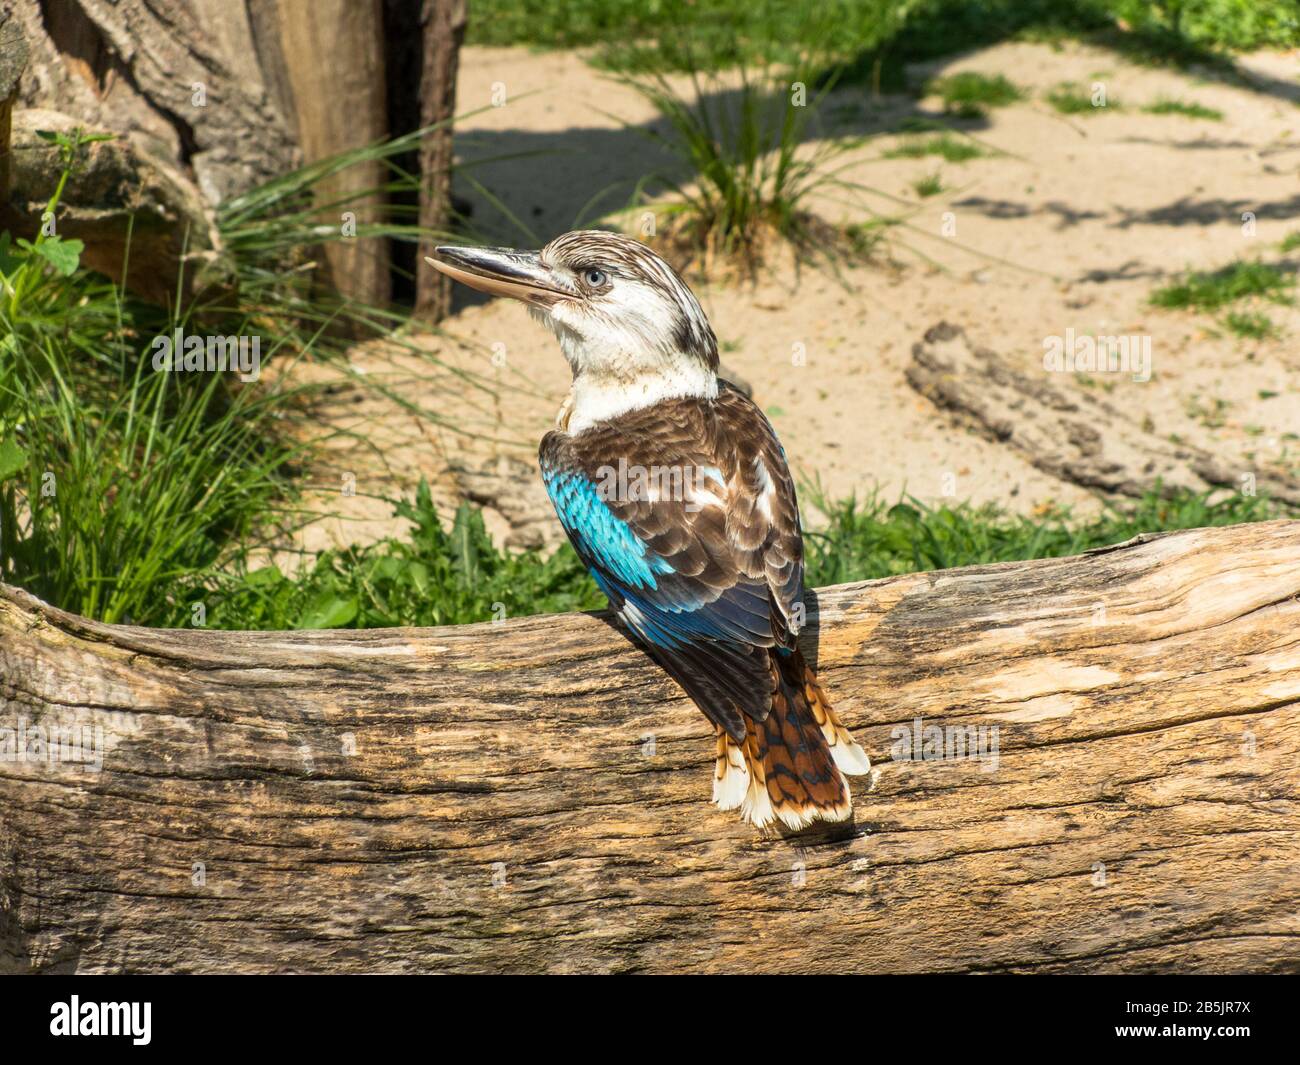 blue winged kookaburra standing on a log Stock Photo